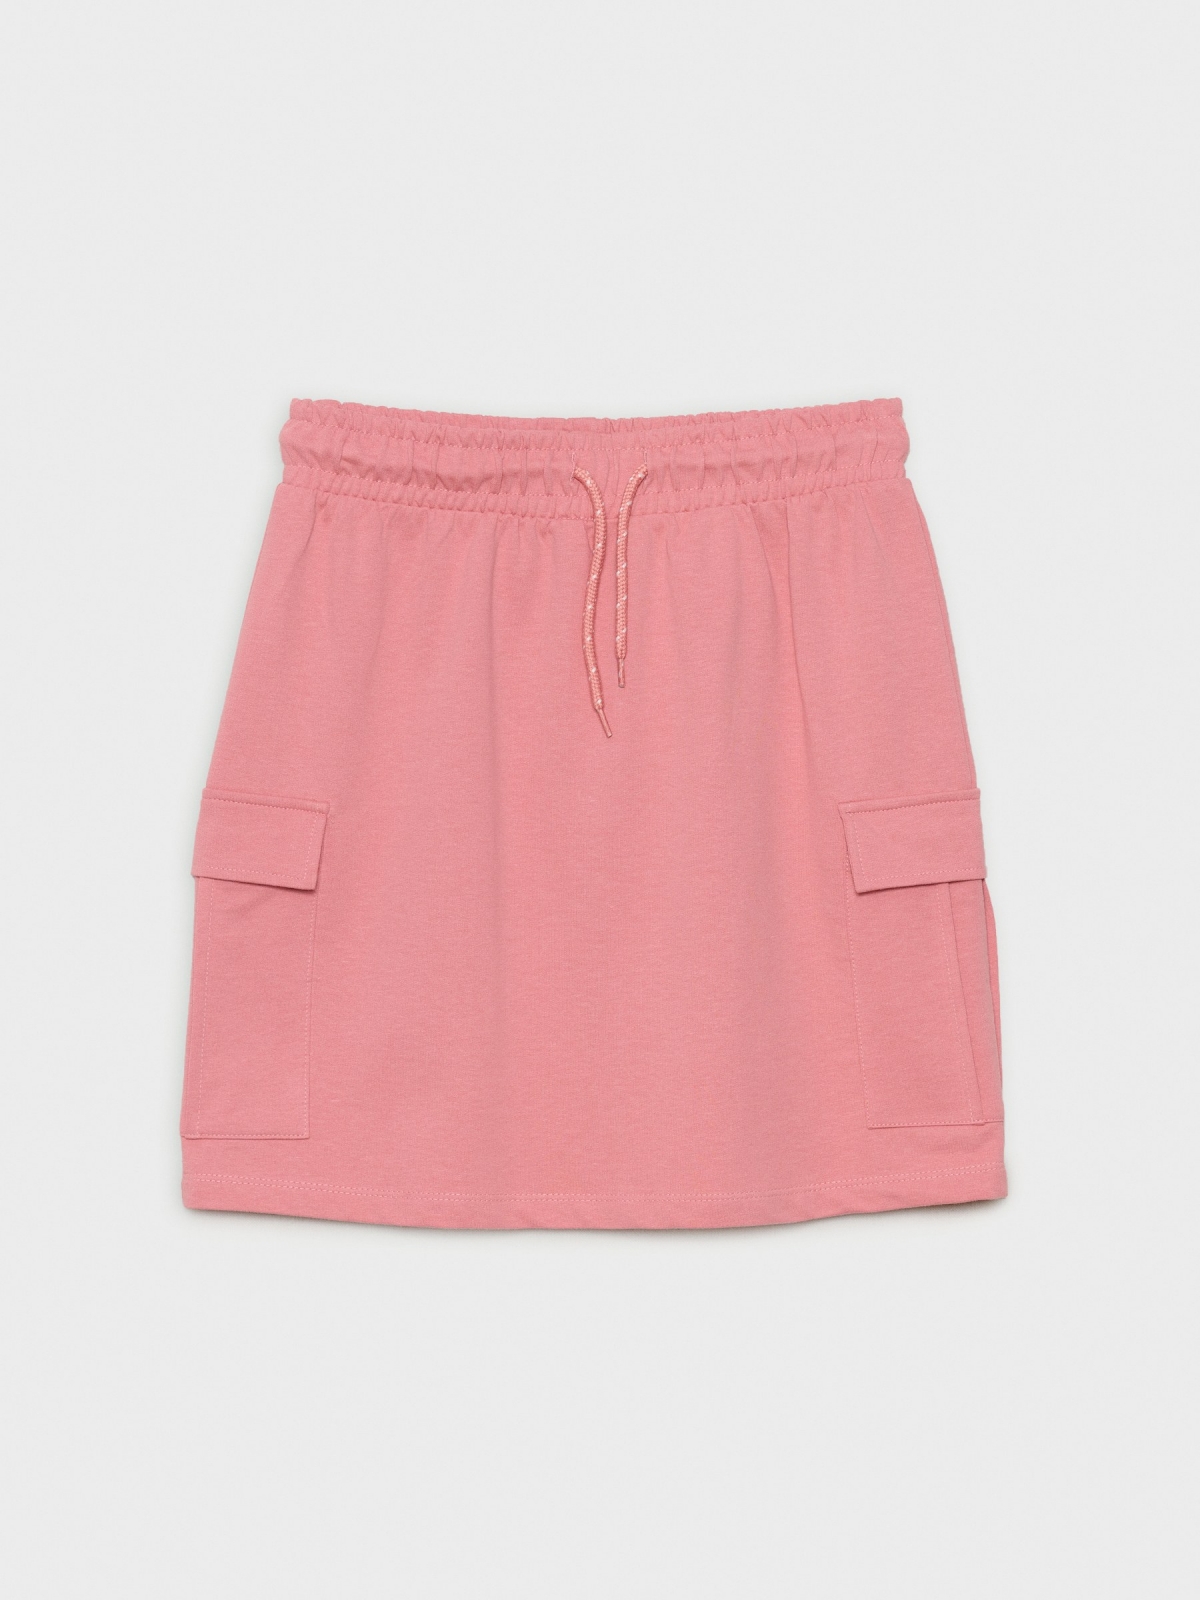  Adjustable cargo skirt pink